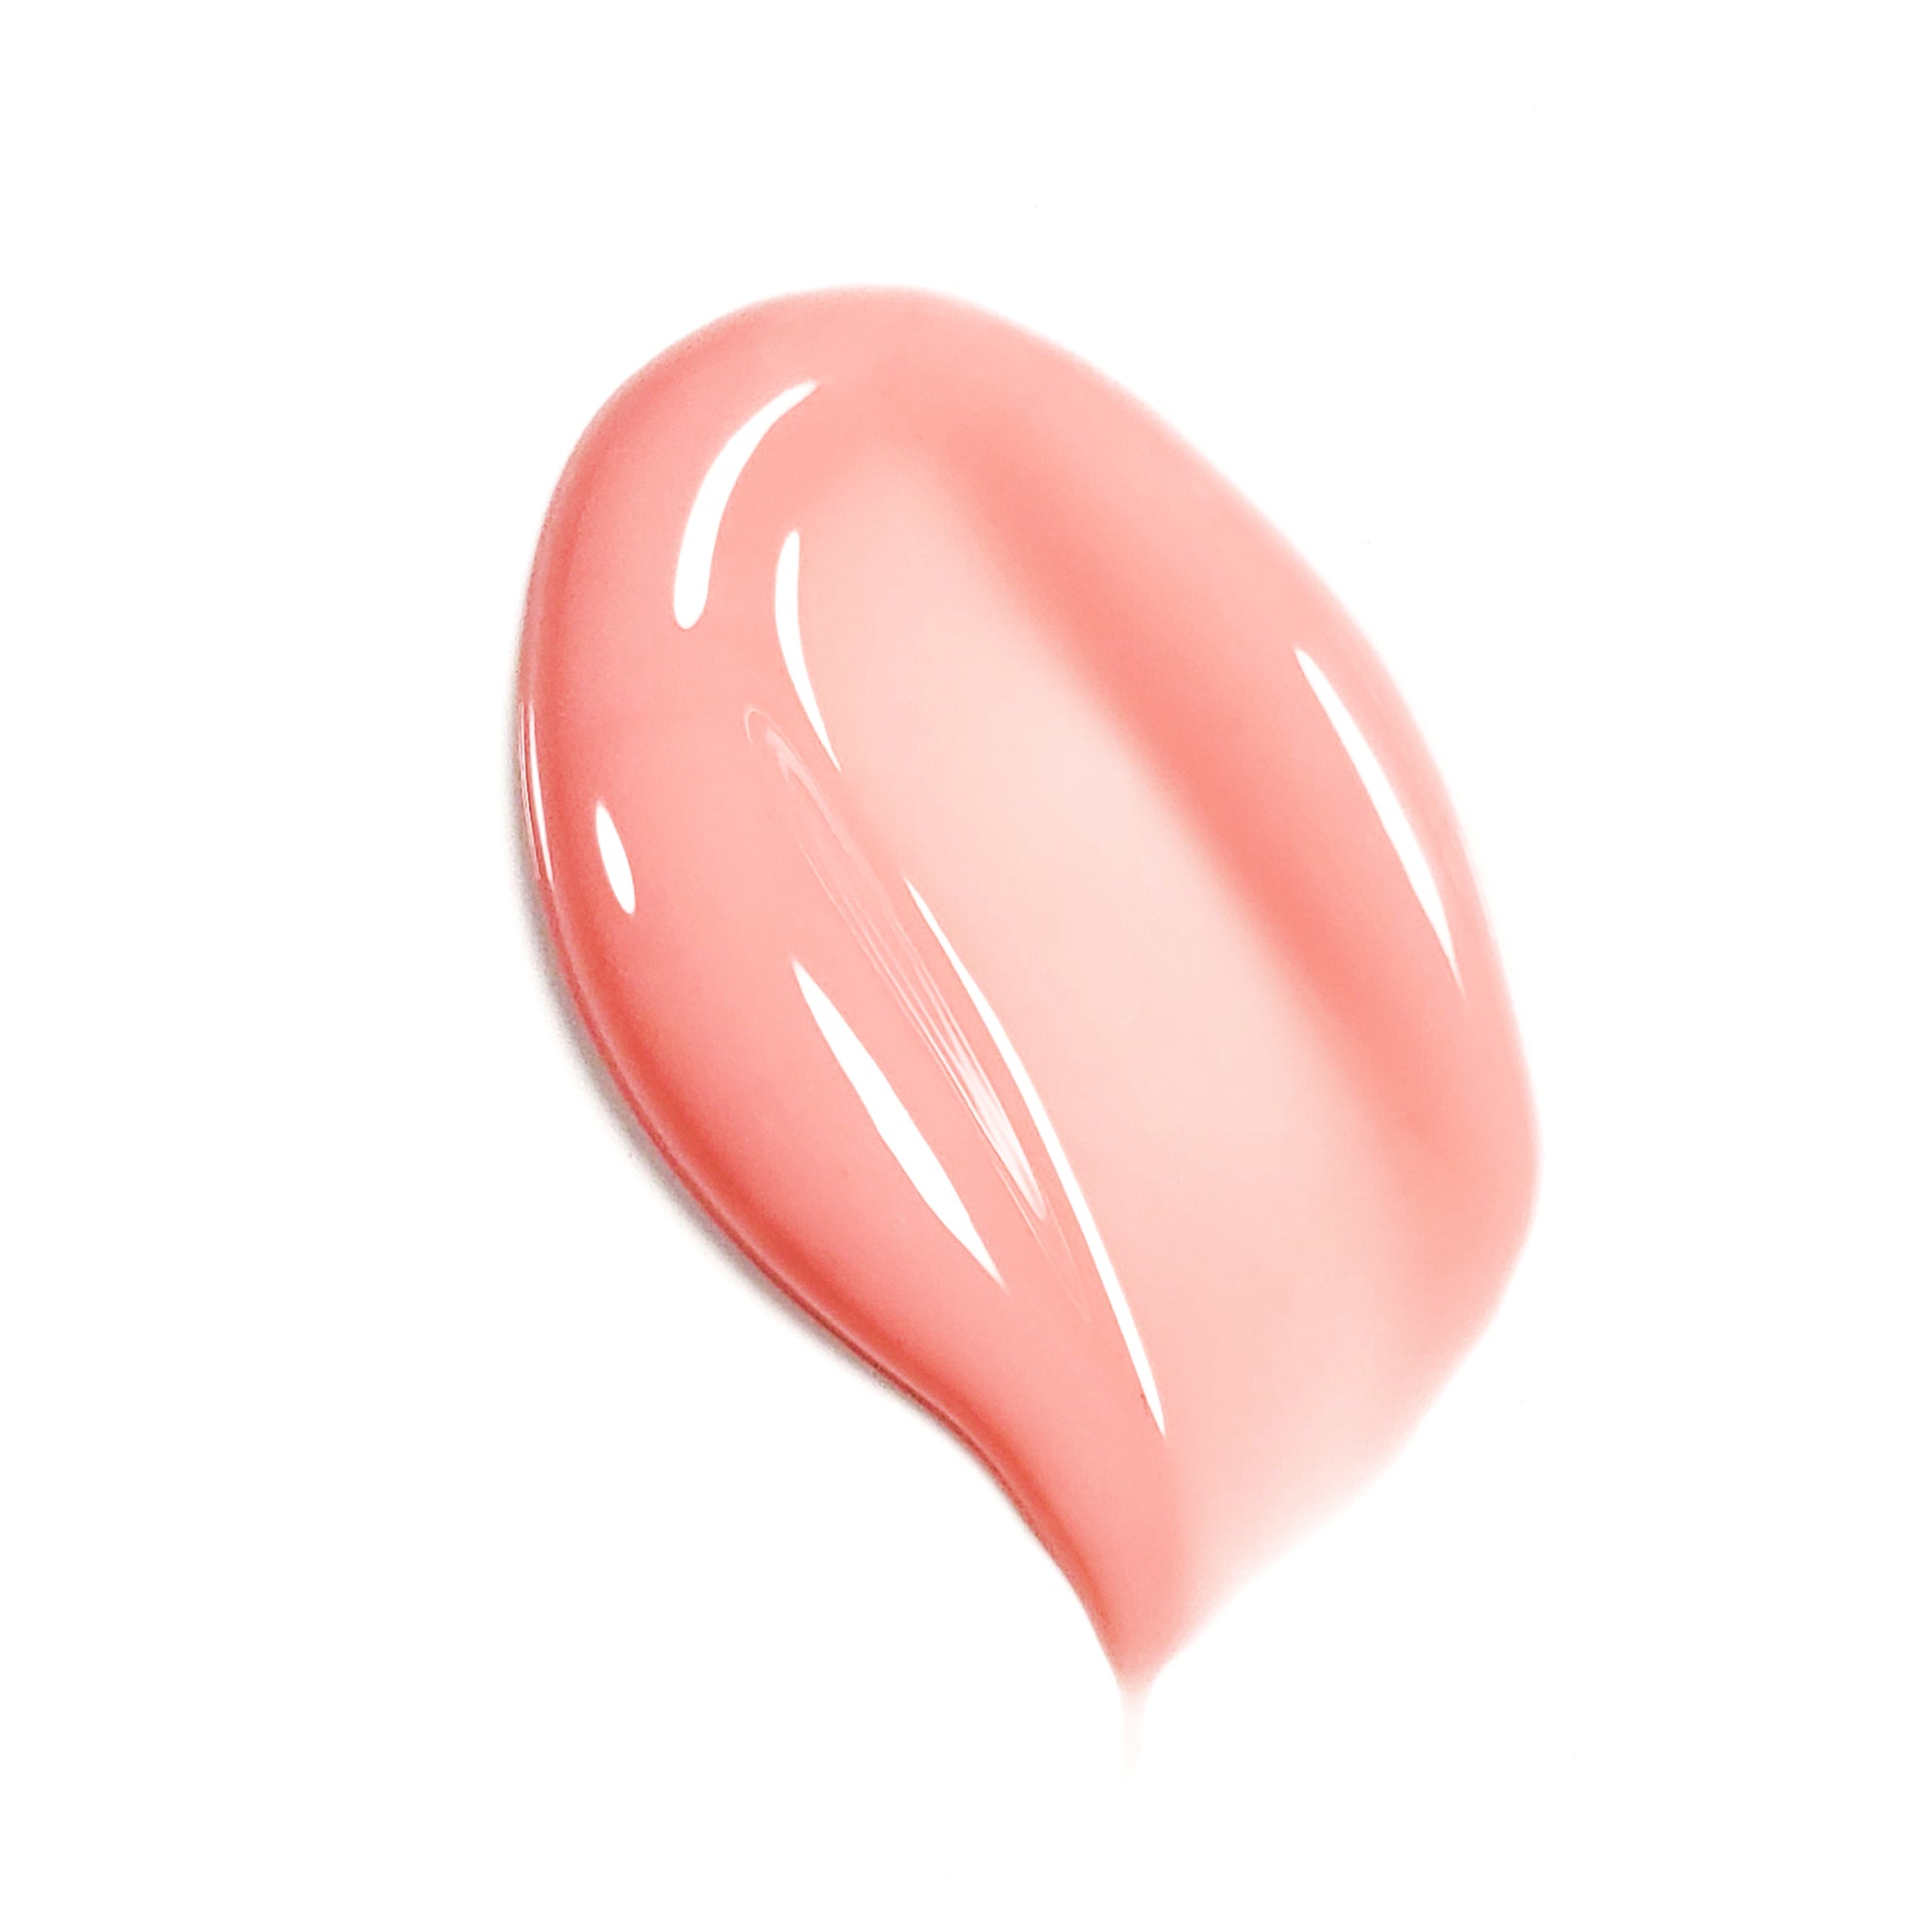 Westman Atelier Squeaky Clean Liquid Lip Balm